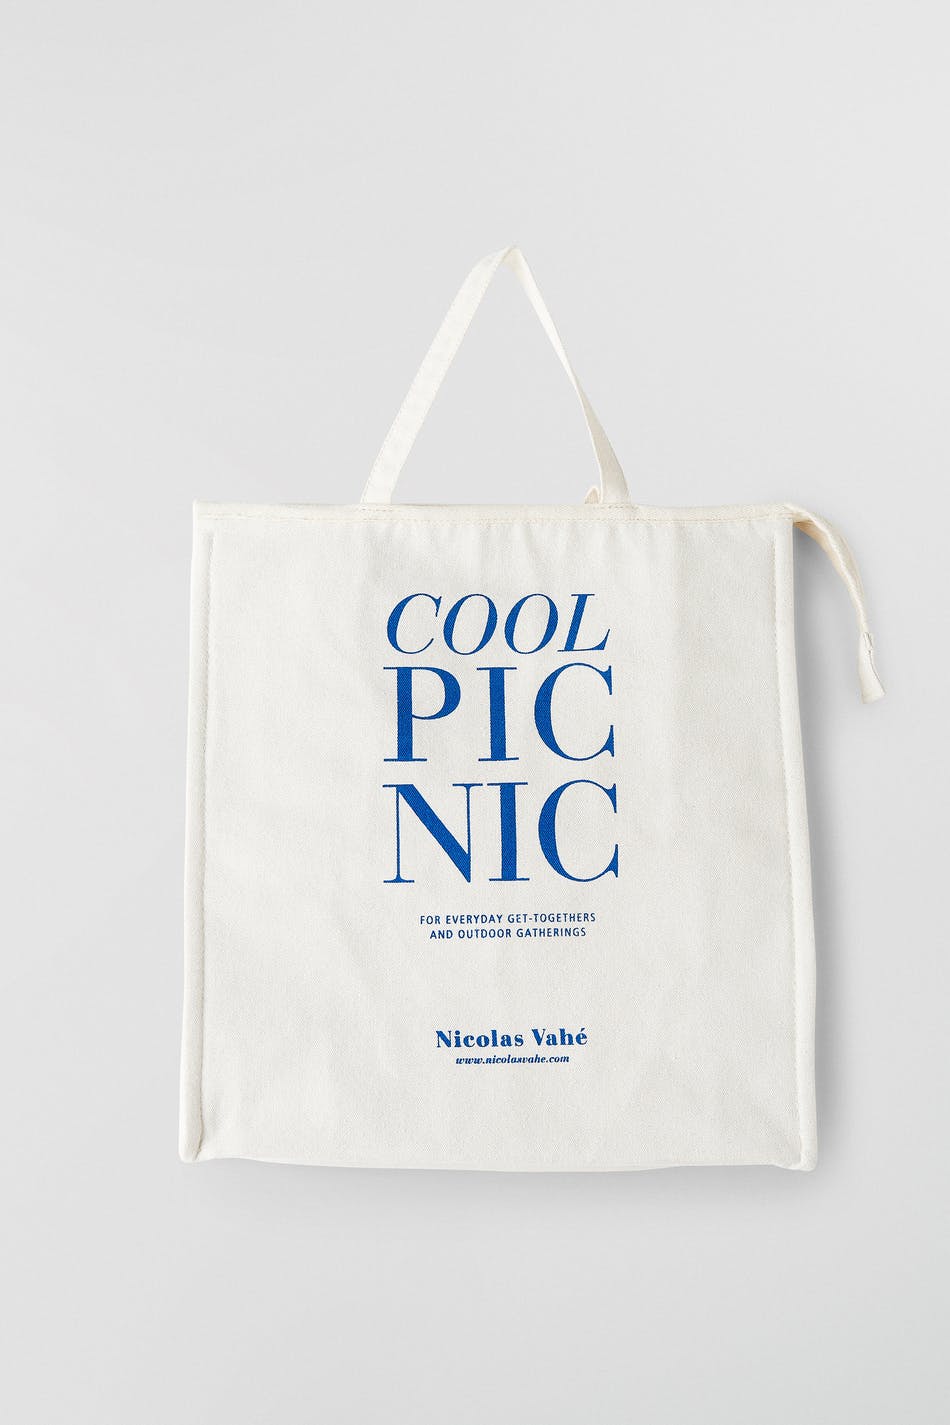 Cool picnic bag